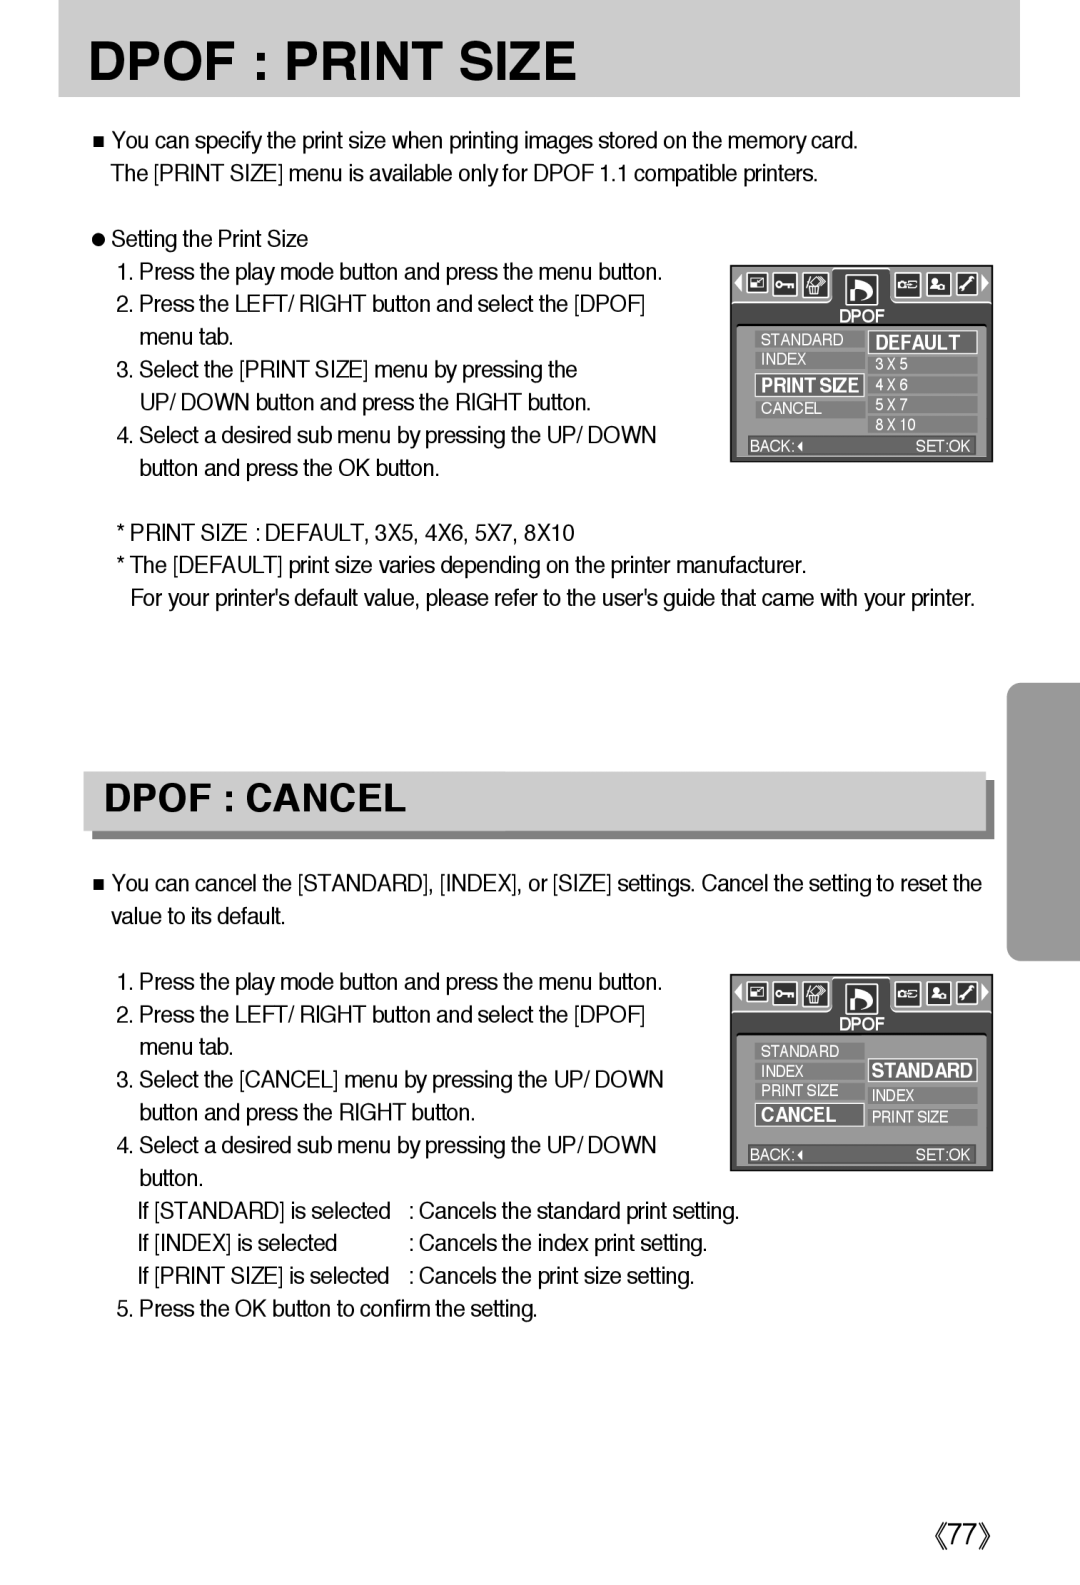 Samsung L50 user manual Dpof Print Size, Dpof Cancel, 《77》 